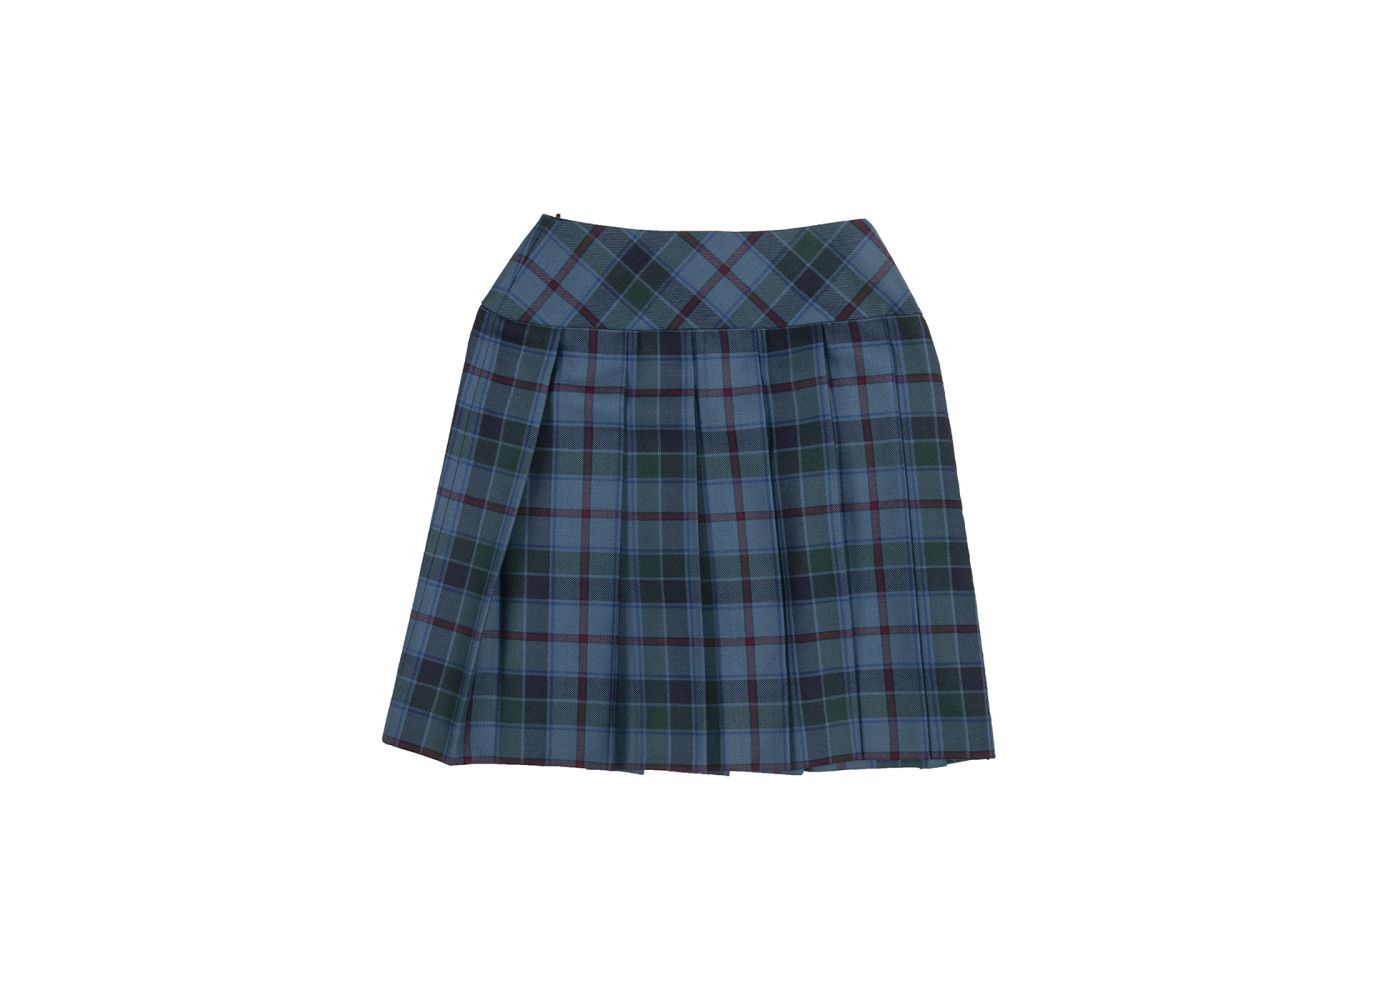 Hipster Pleated Skirt in Leith Tartan - Mini Length